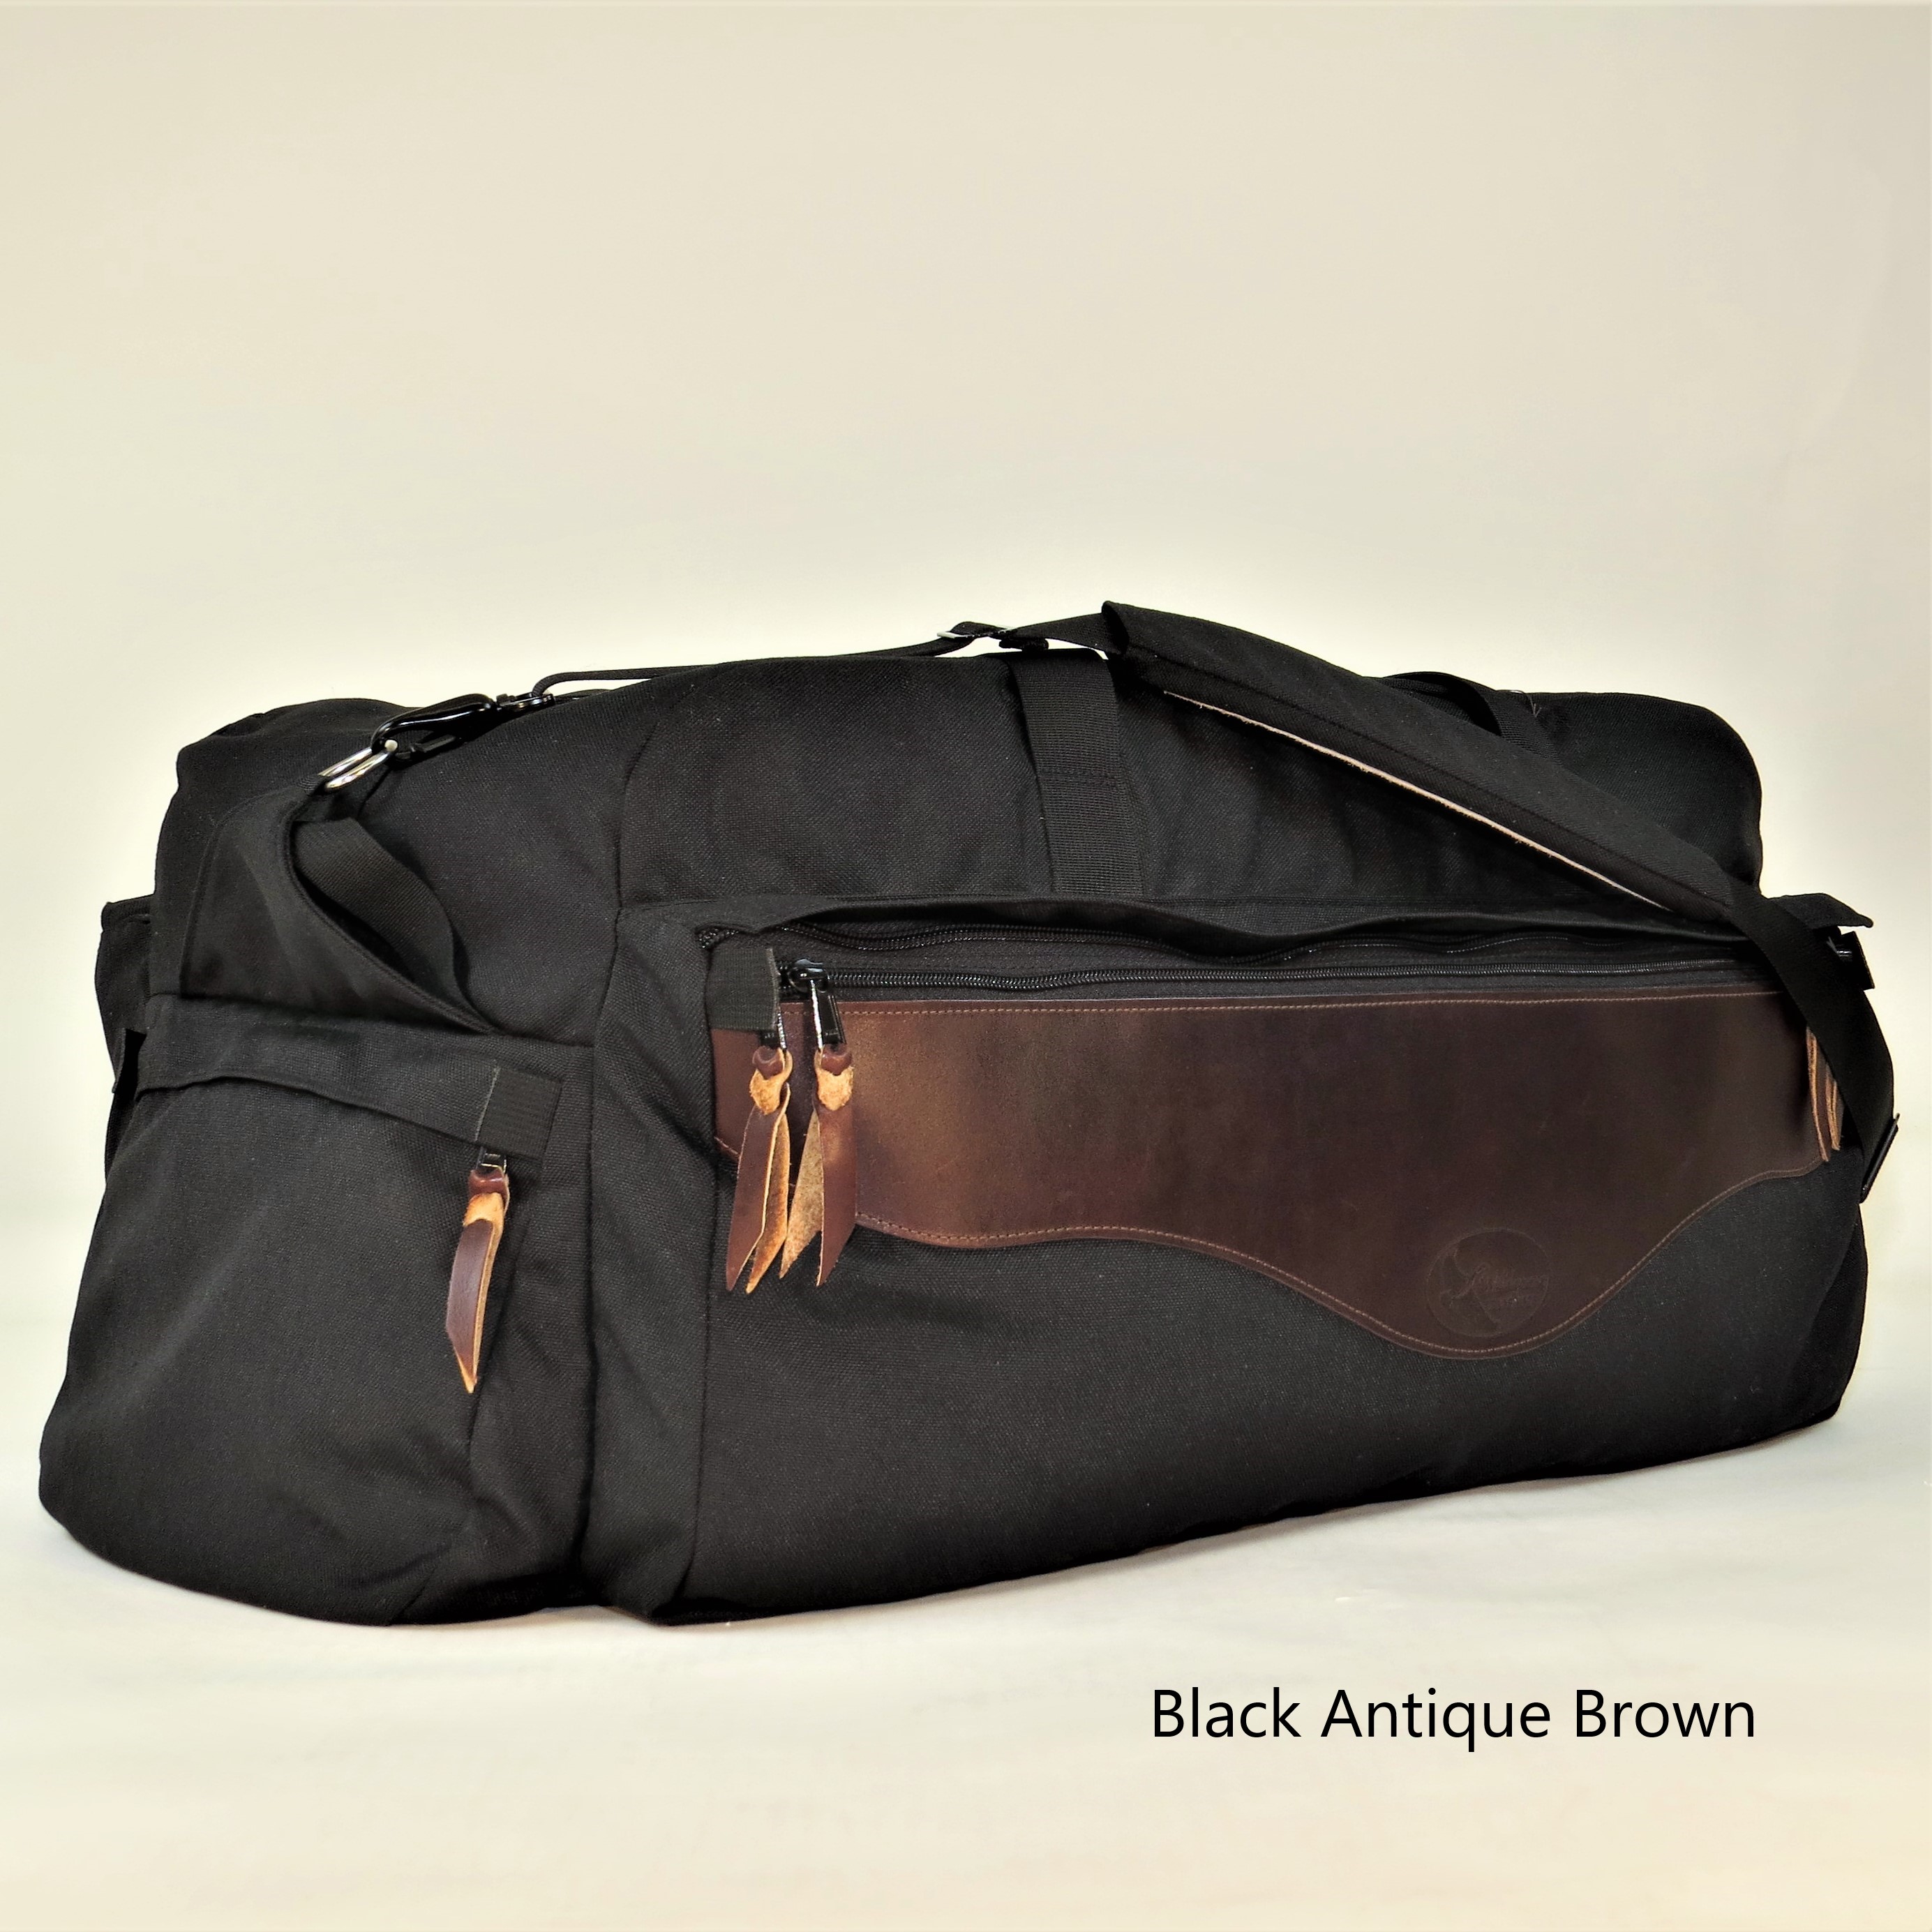 Cargo Luggage - Large Multi Pocket with Leather Trim